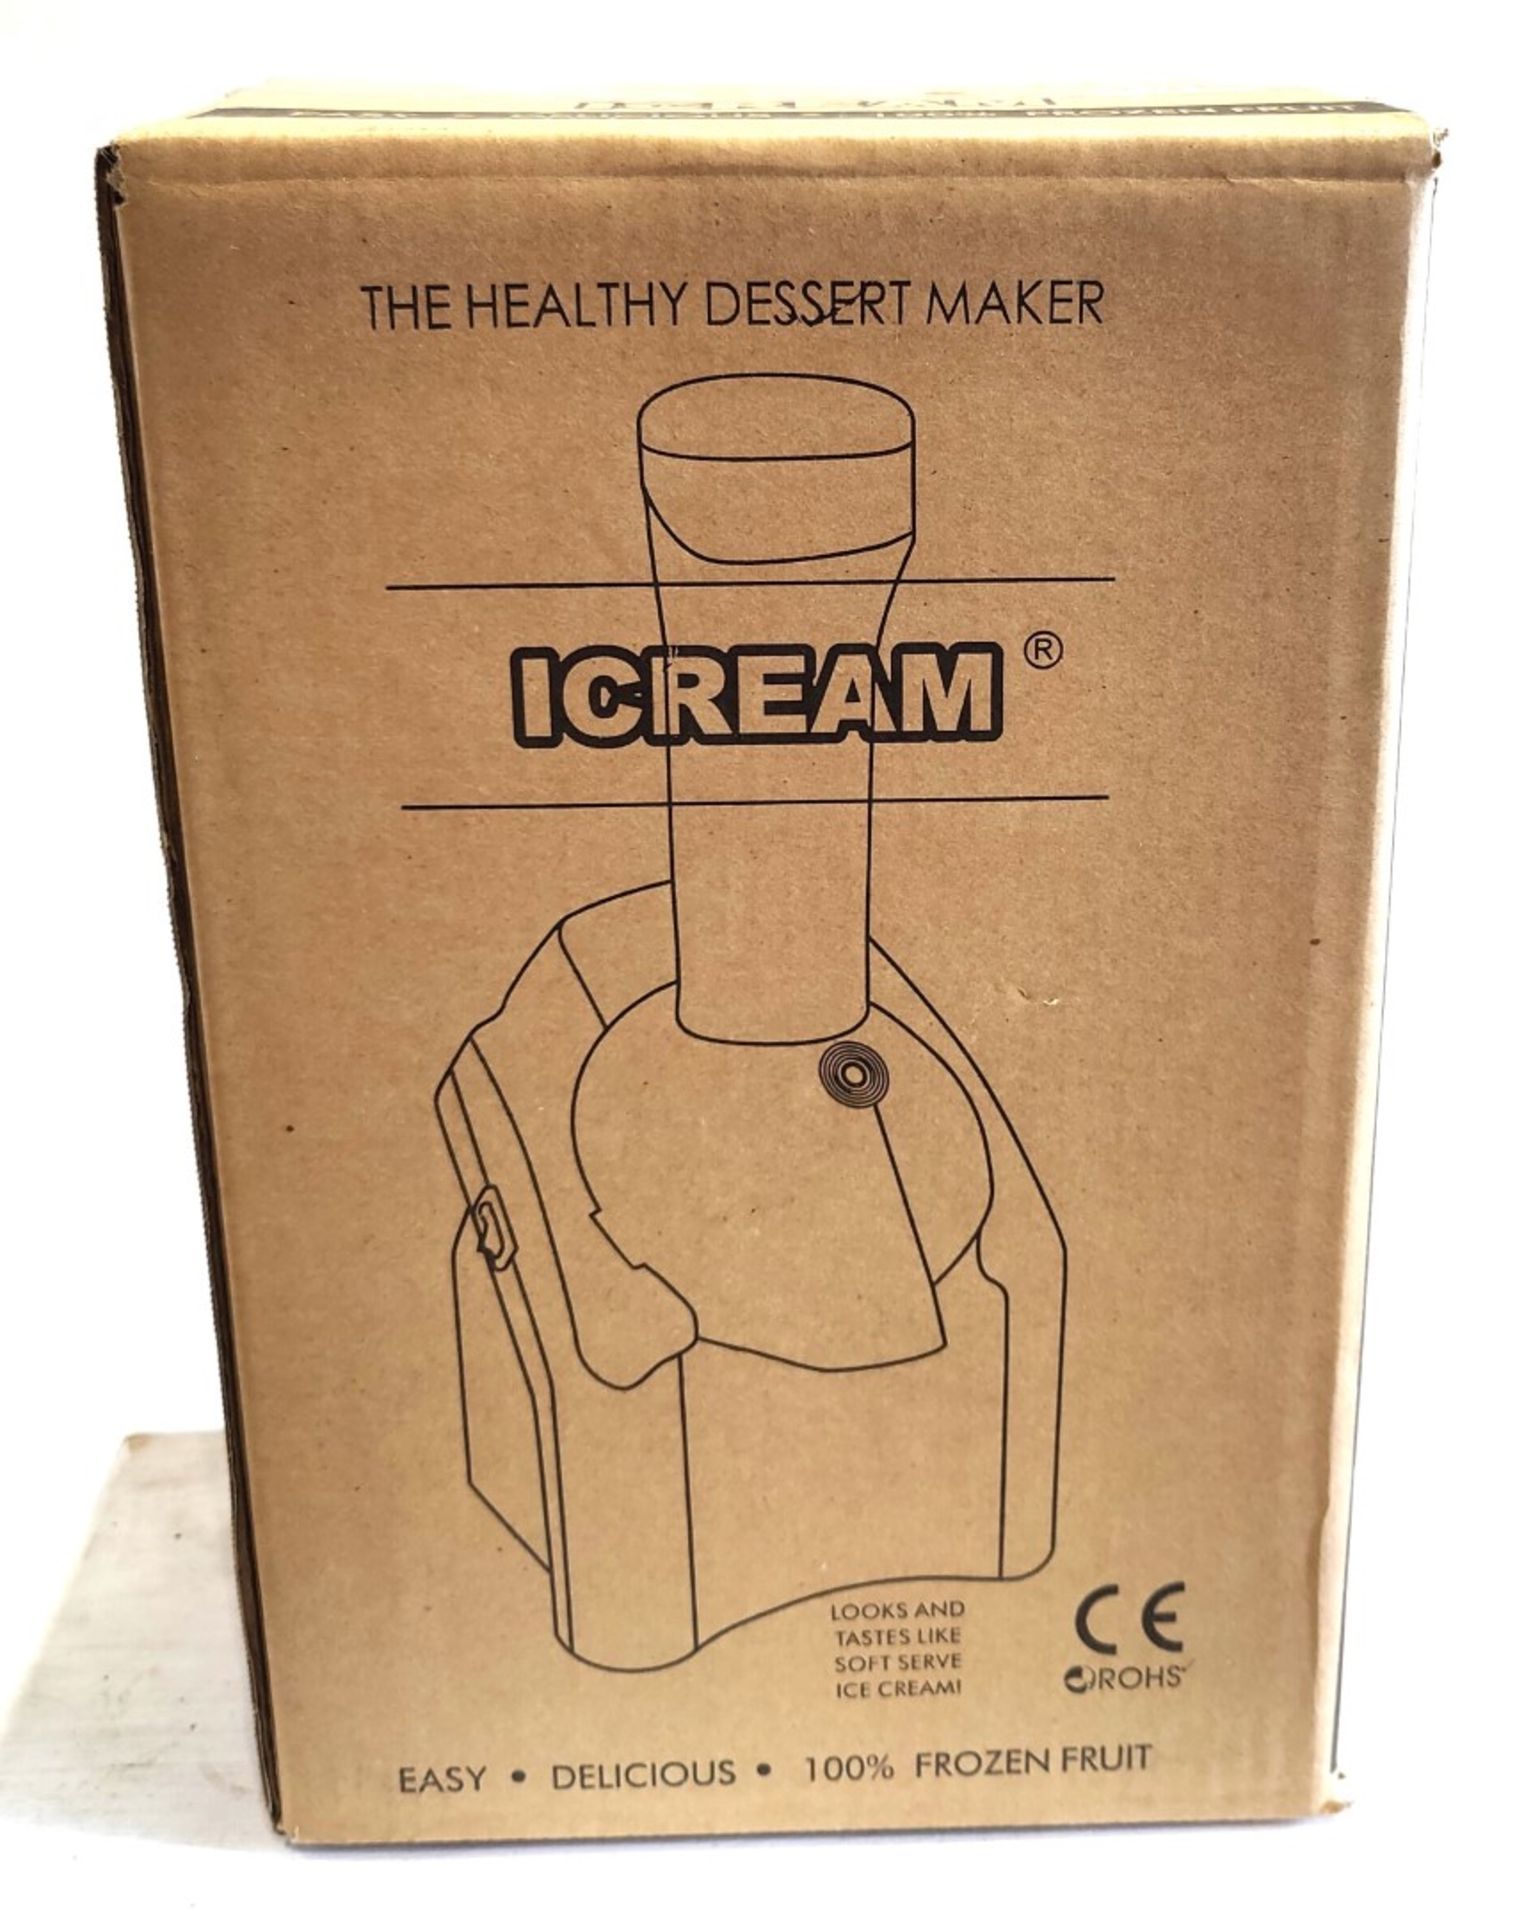 1 x Icream Healthy Desert Maker - Yogurt and Soft Ice Cream Home Appliance - 240v - Brand New - Image 5 of 12